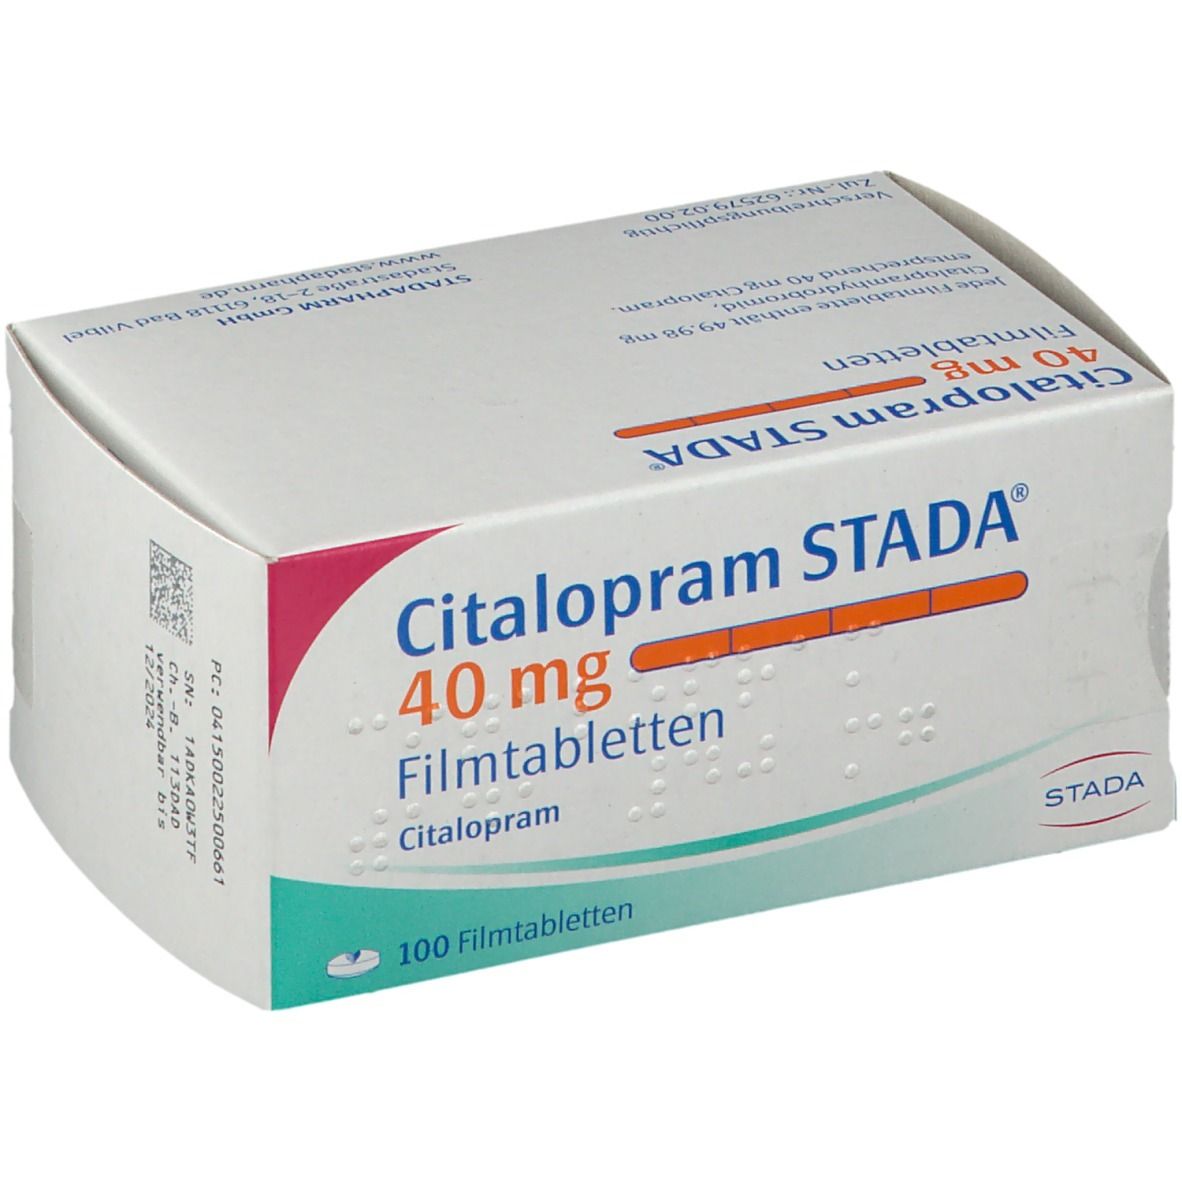 Citalopram STADA® 40 mg